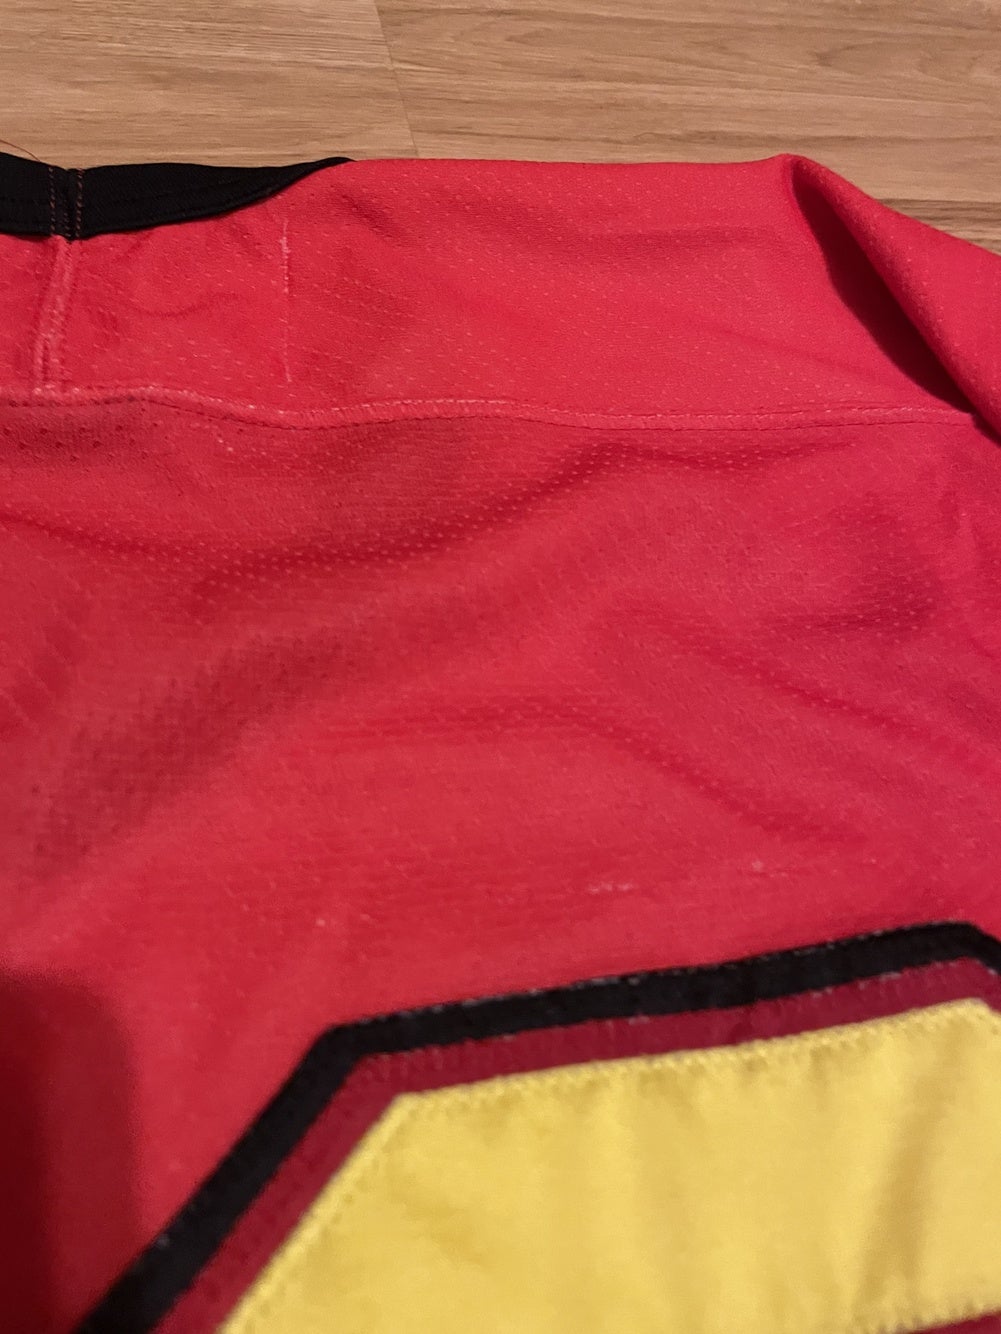 CCM Vancouver Canucks Salmon Gradient Flying Skate NHL Jersey Red Alternate  M